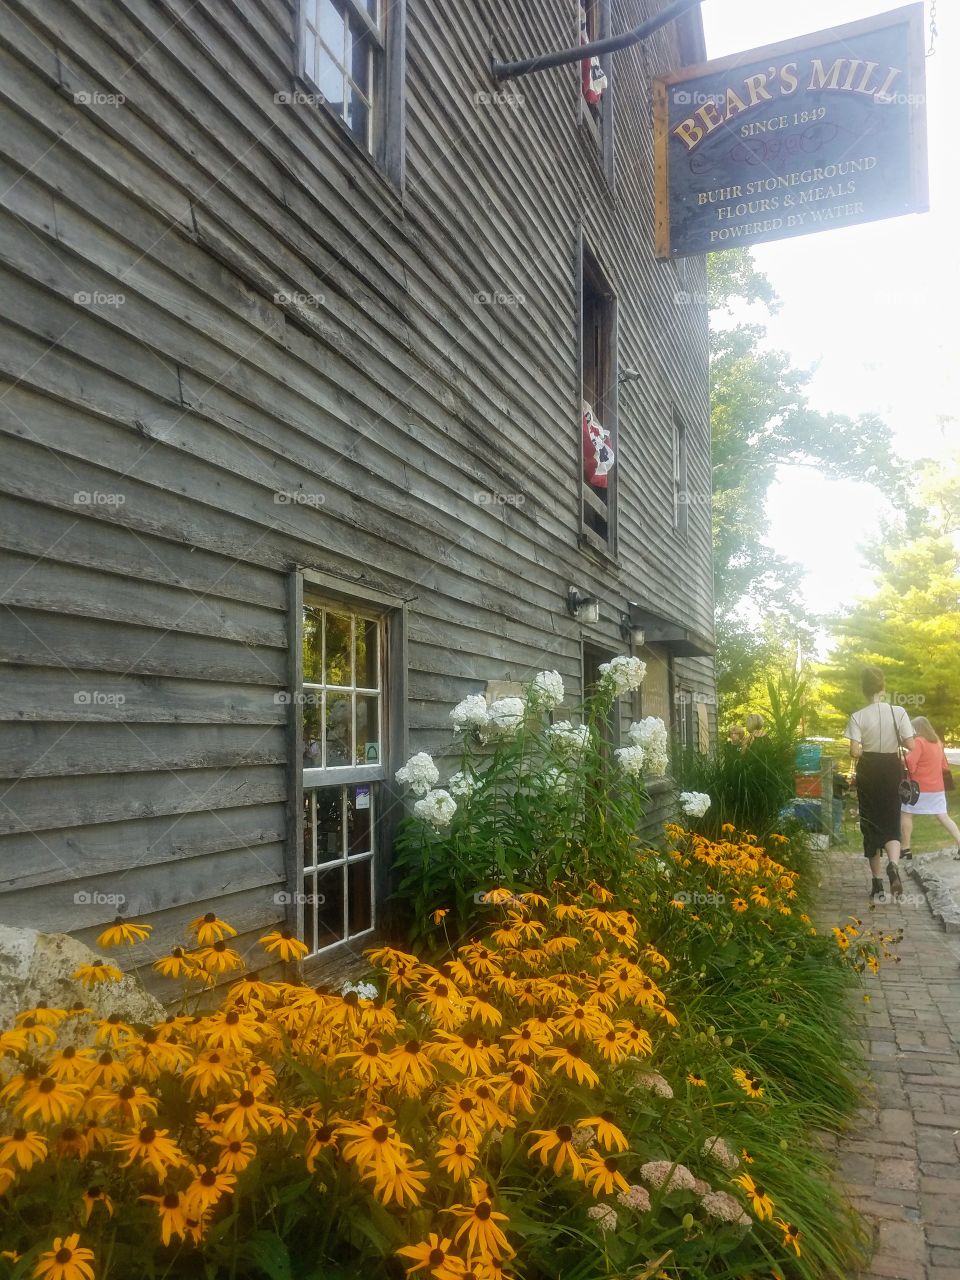 Historic Bear's Mill